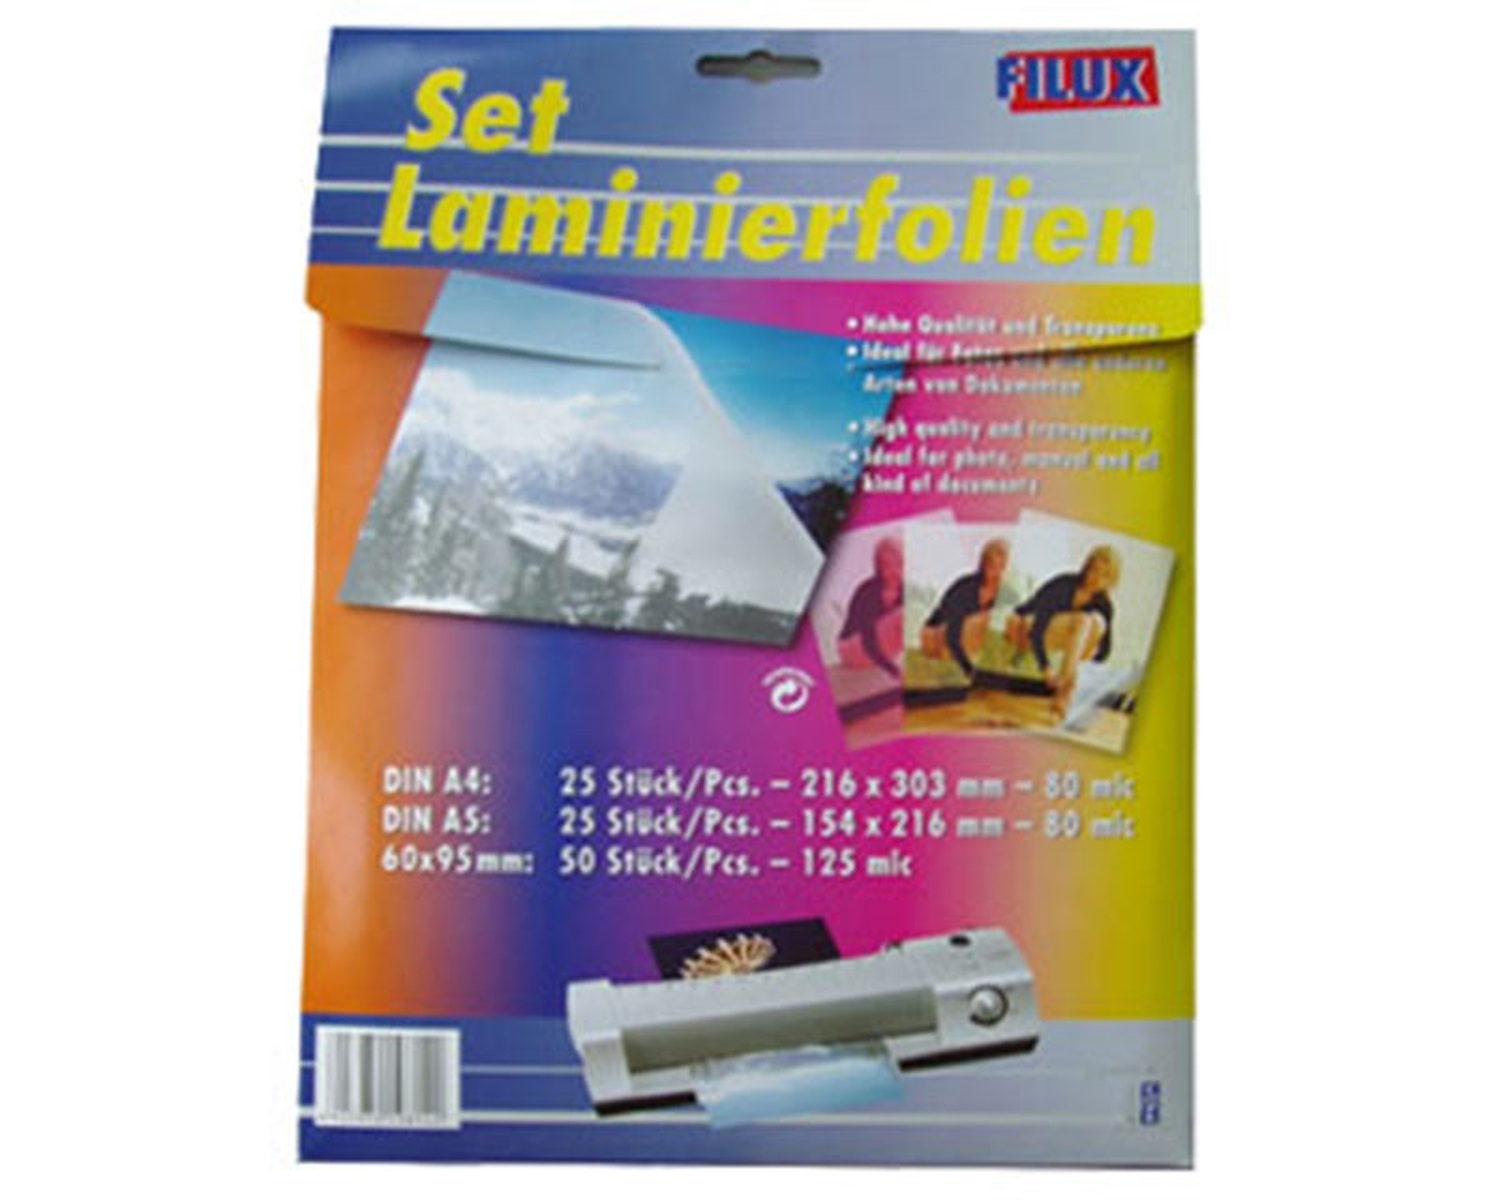 FILUX Laminierfolien Set A4, A5 und Visitenkartengrösse, 100 Stk.